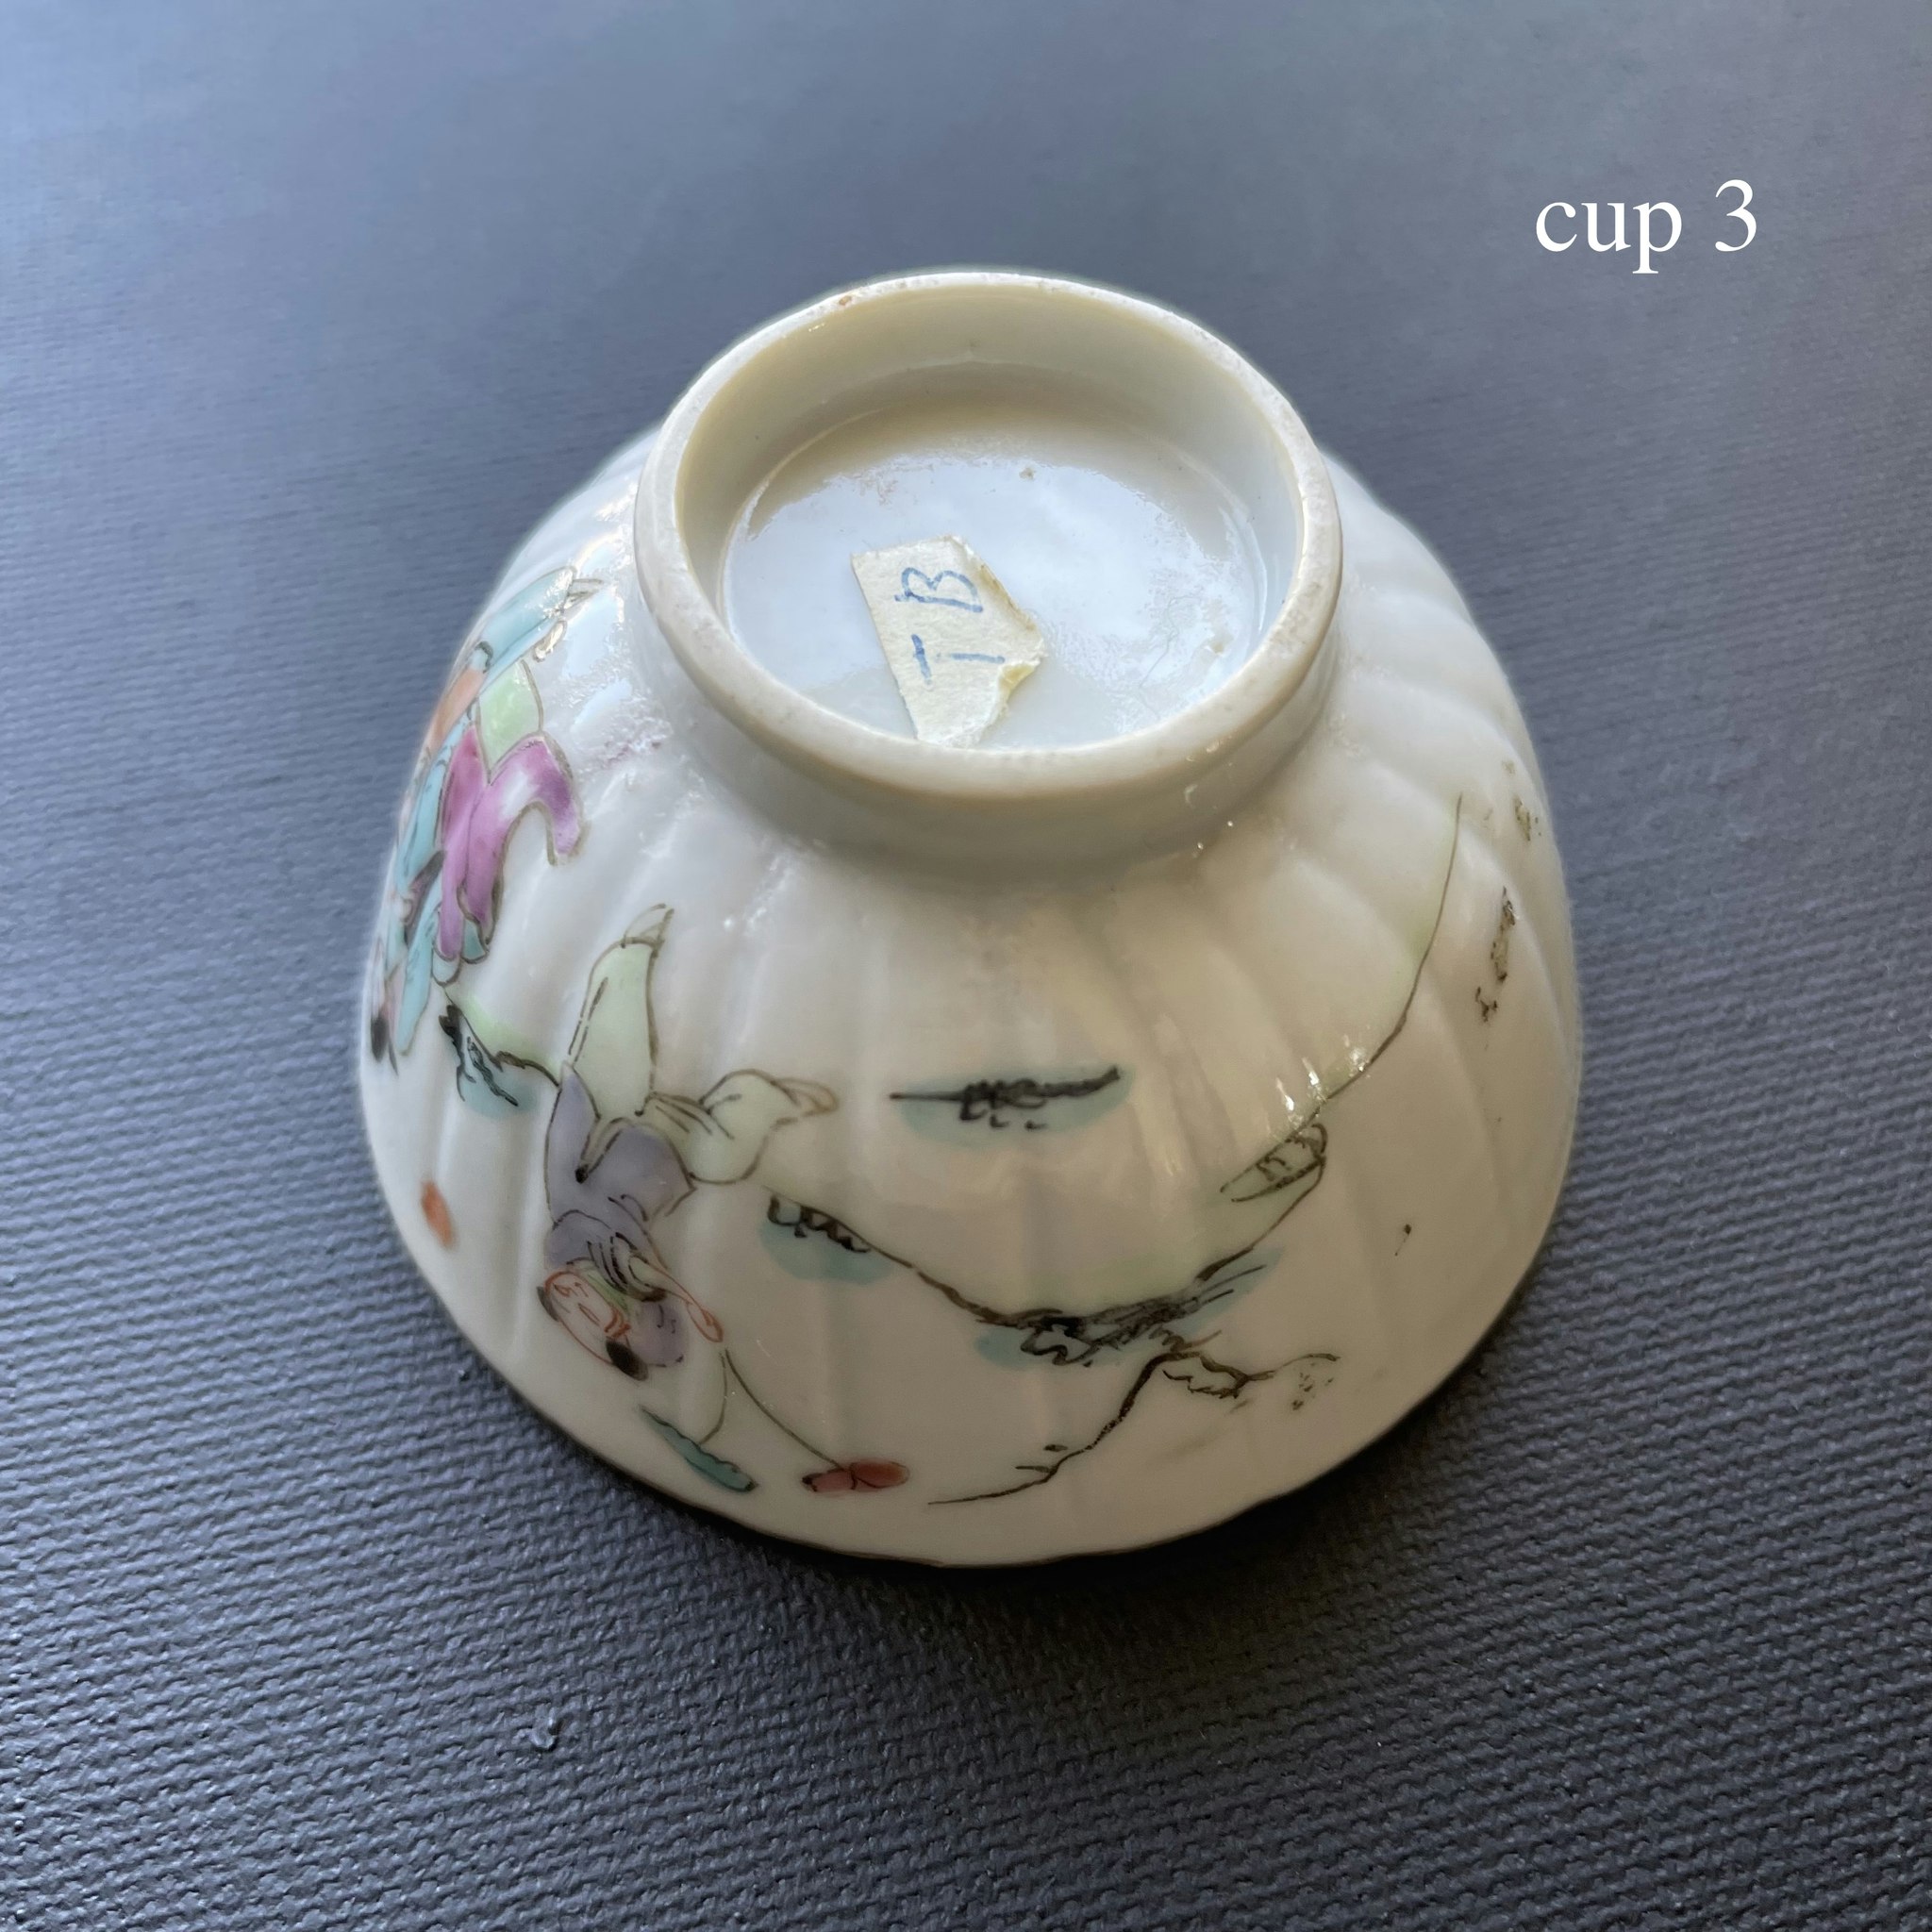 Antique Chinese teacups (set of 4) Late Qing Dynasty, Tongzhi / Guangxu